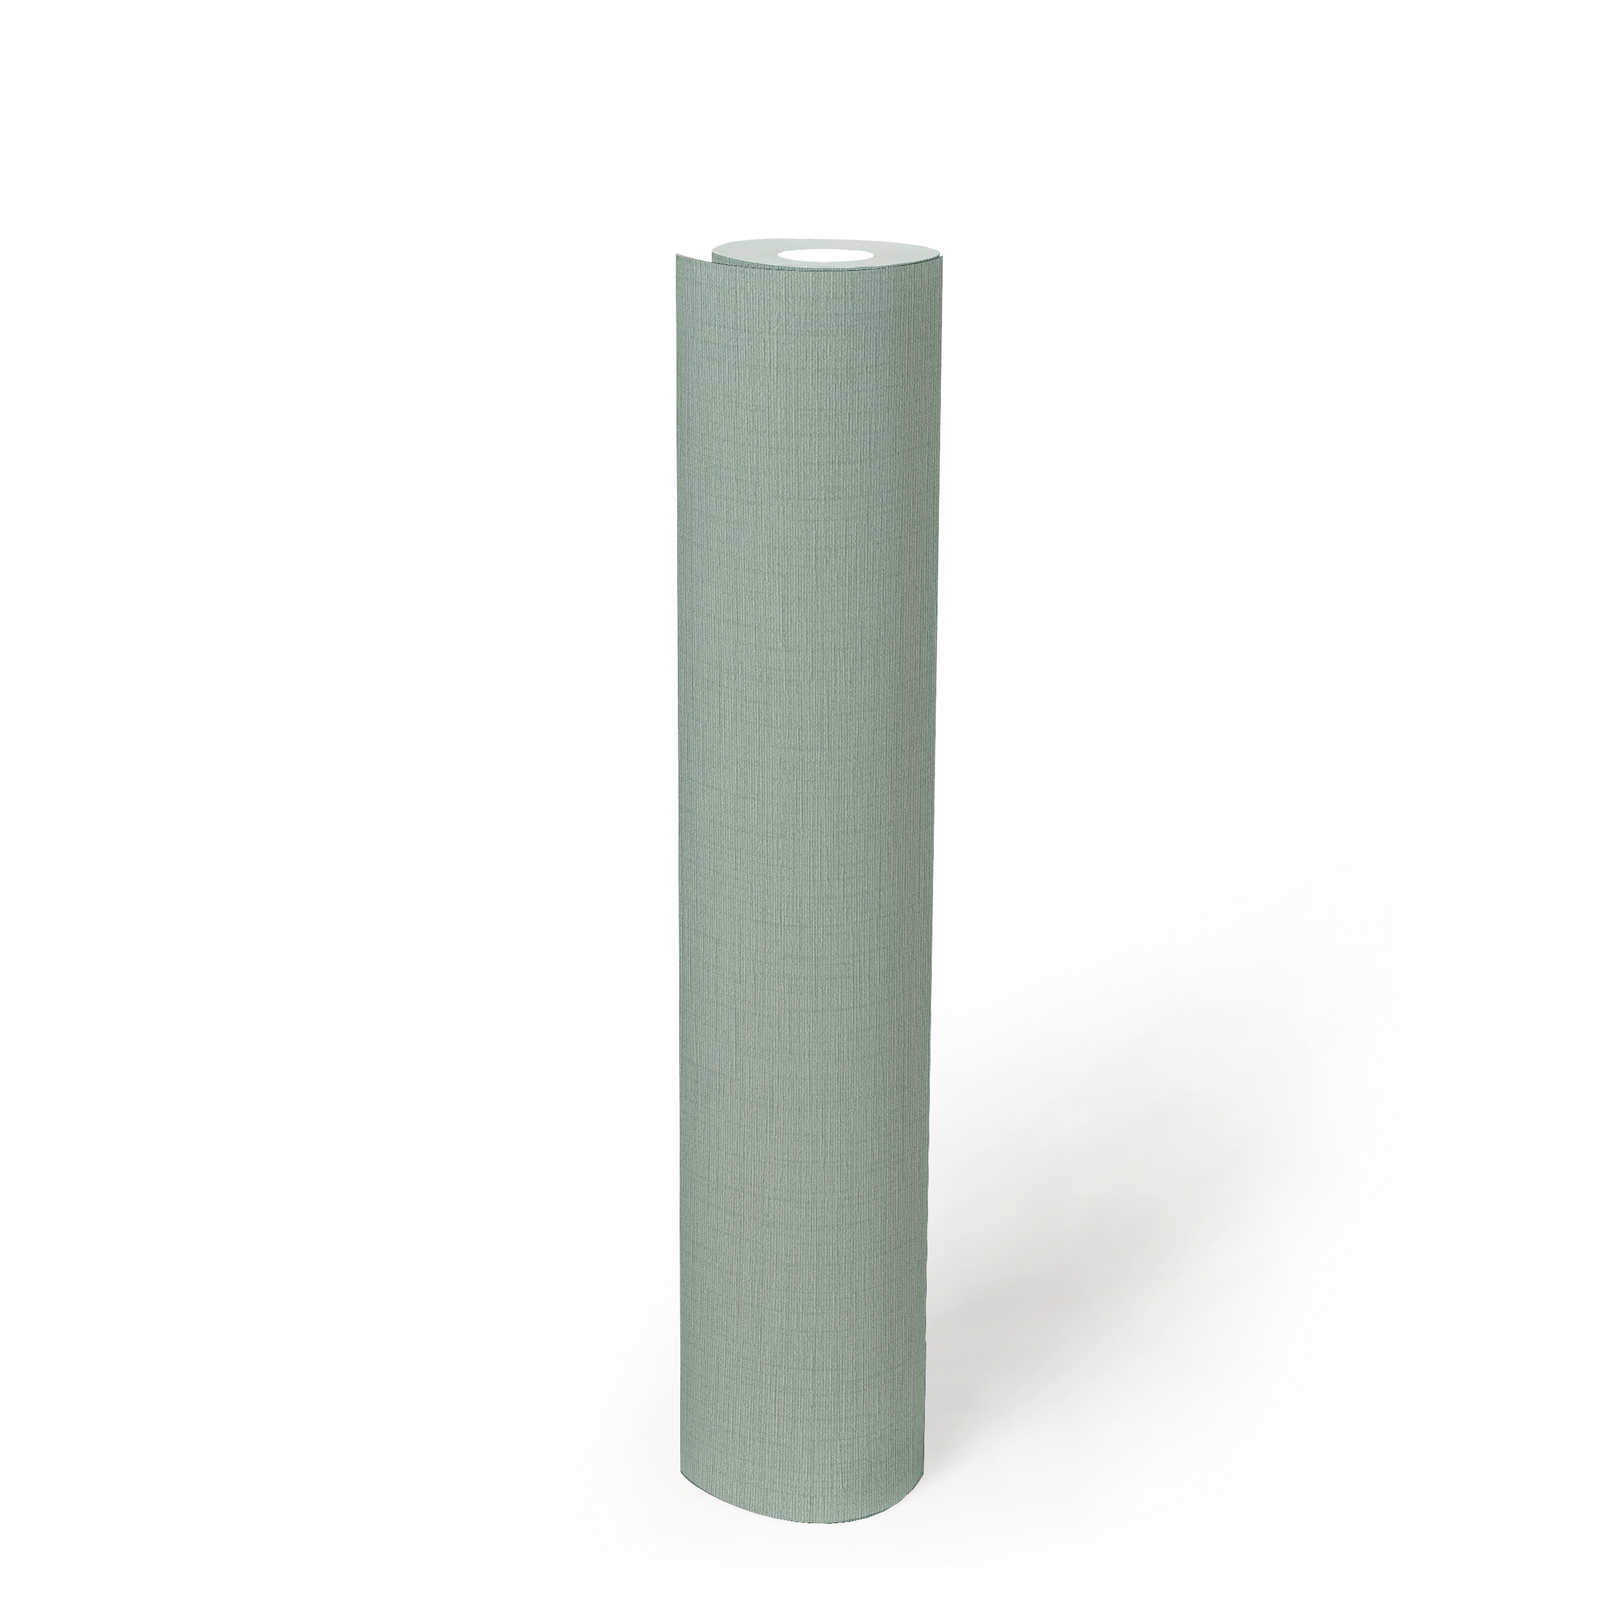             Wallpaper sage green with linen look & texture effect - green
        